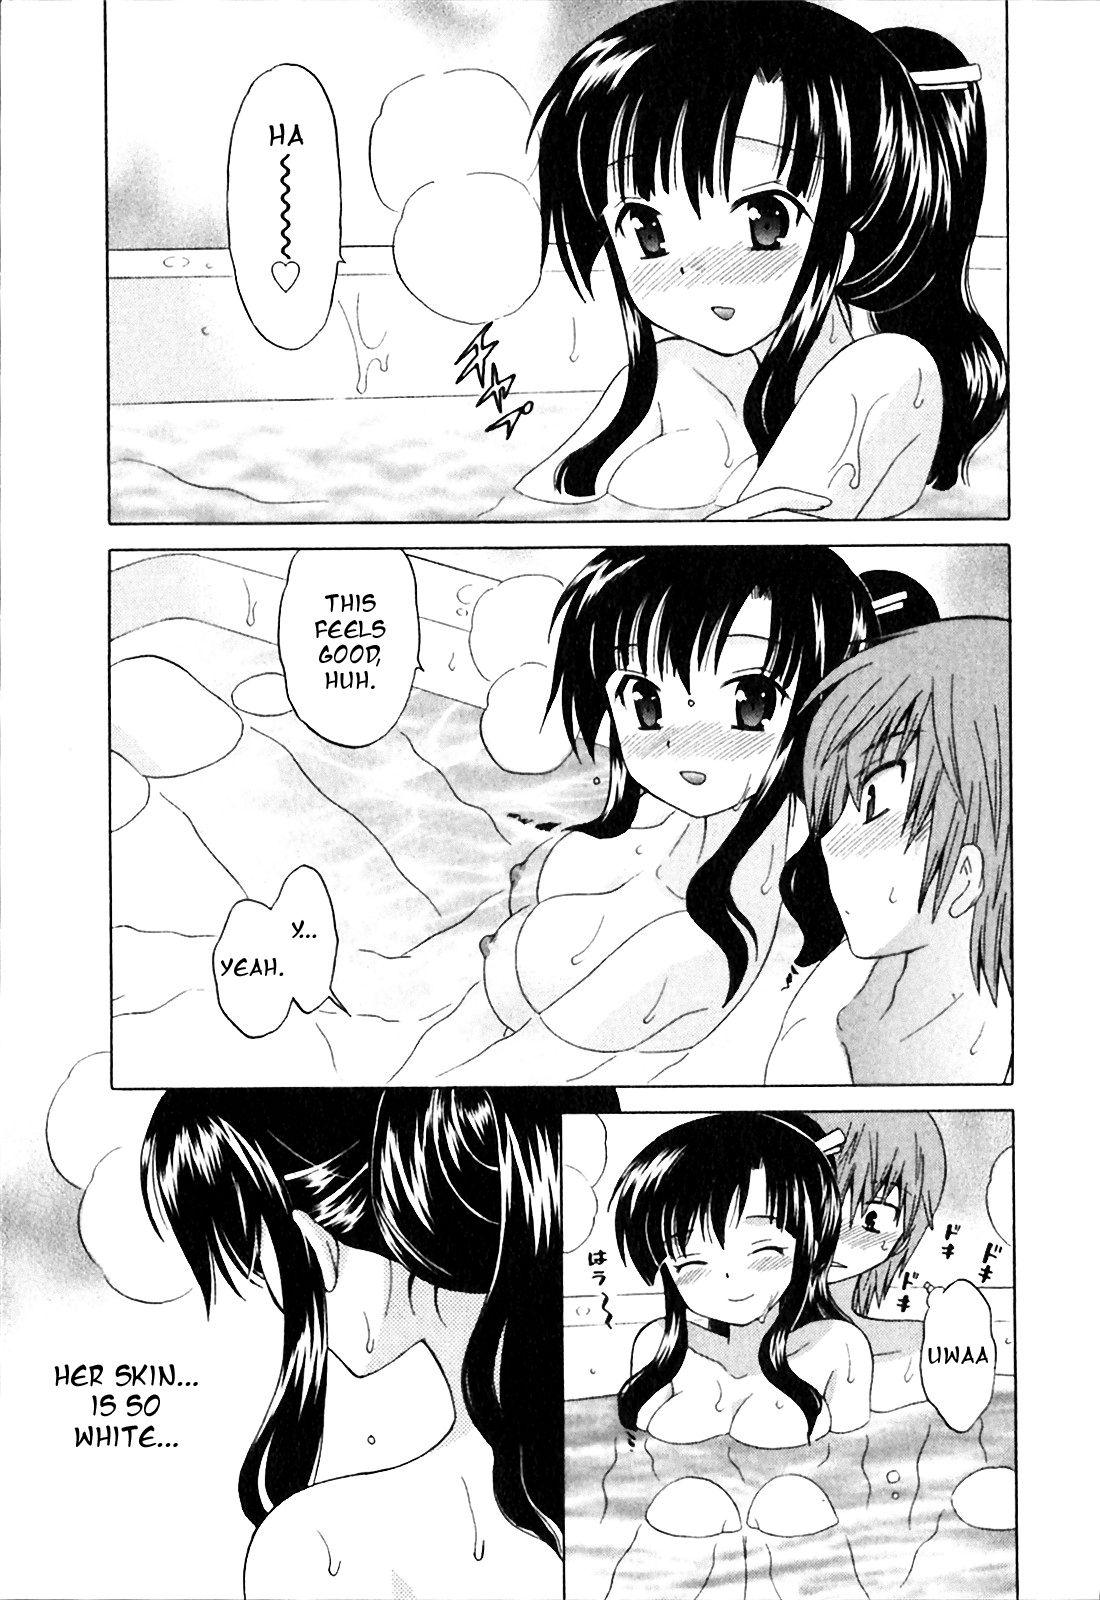 Erotic manga fanmade 1 girls